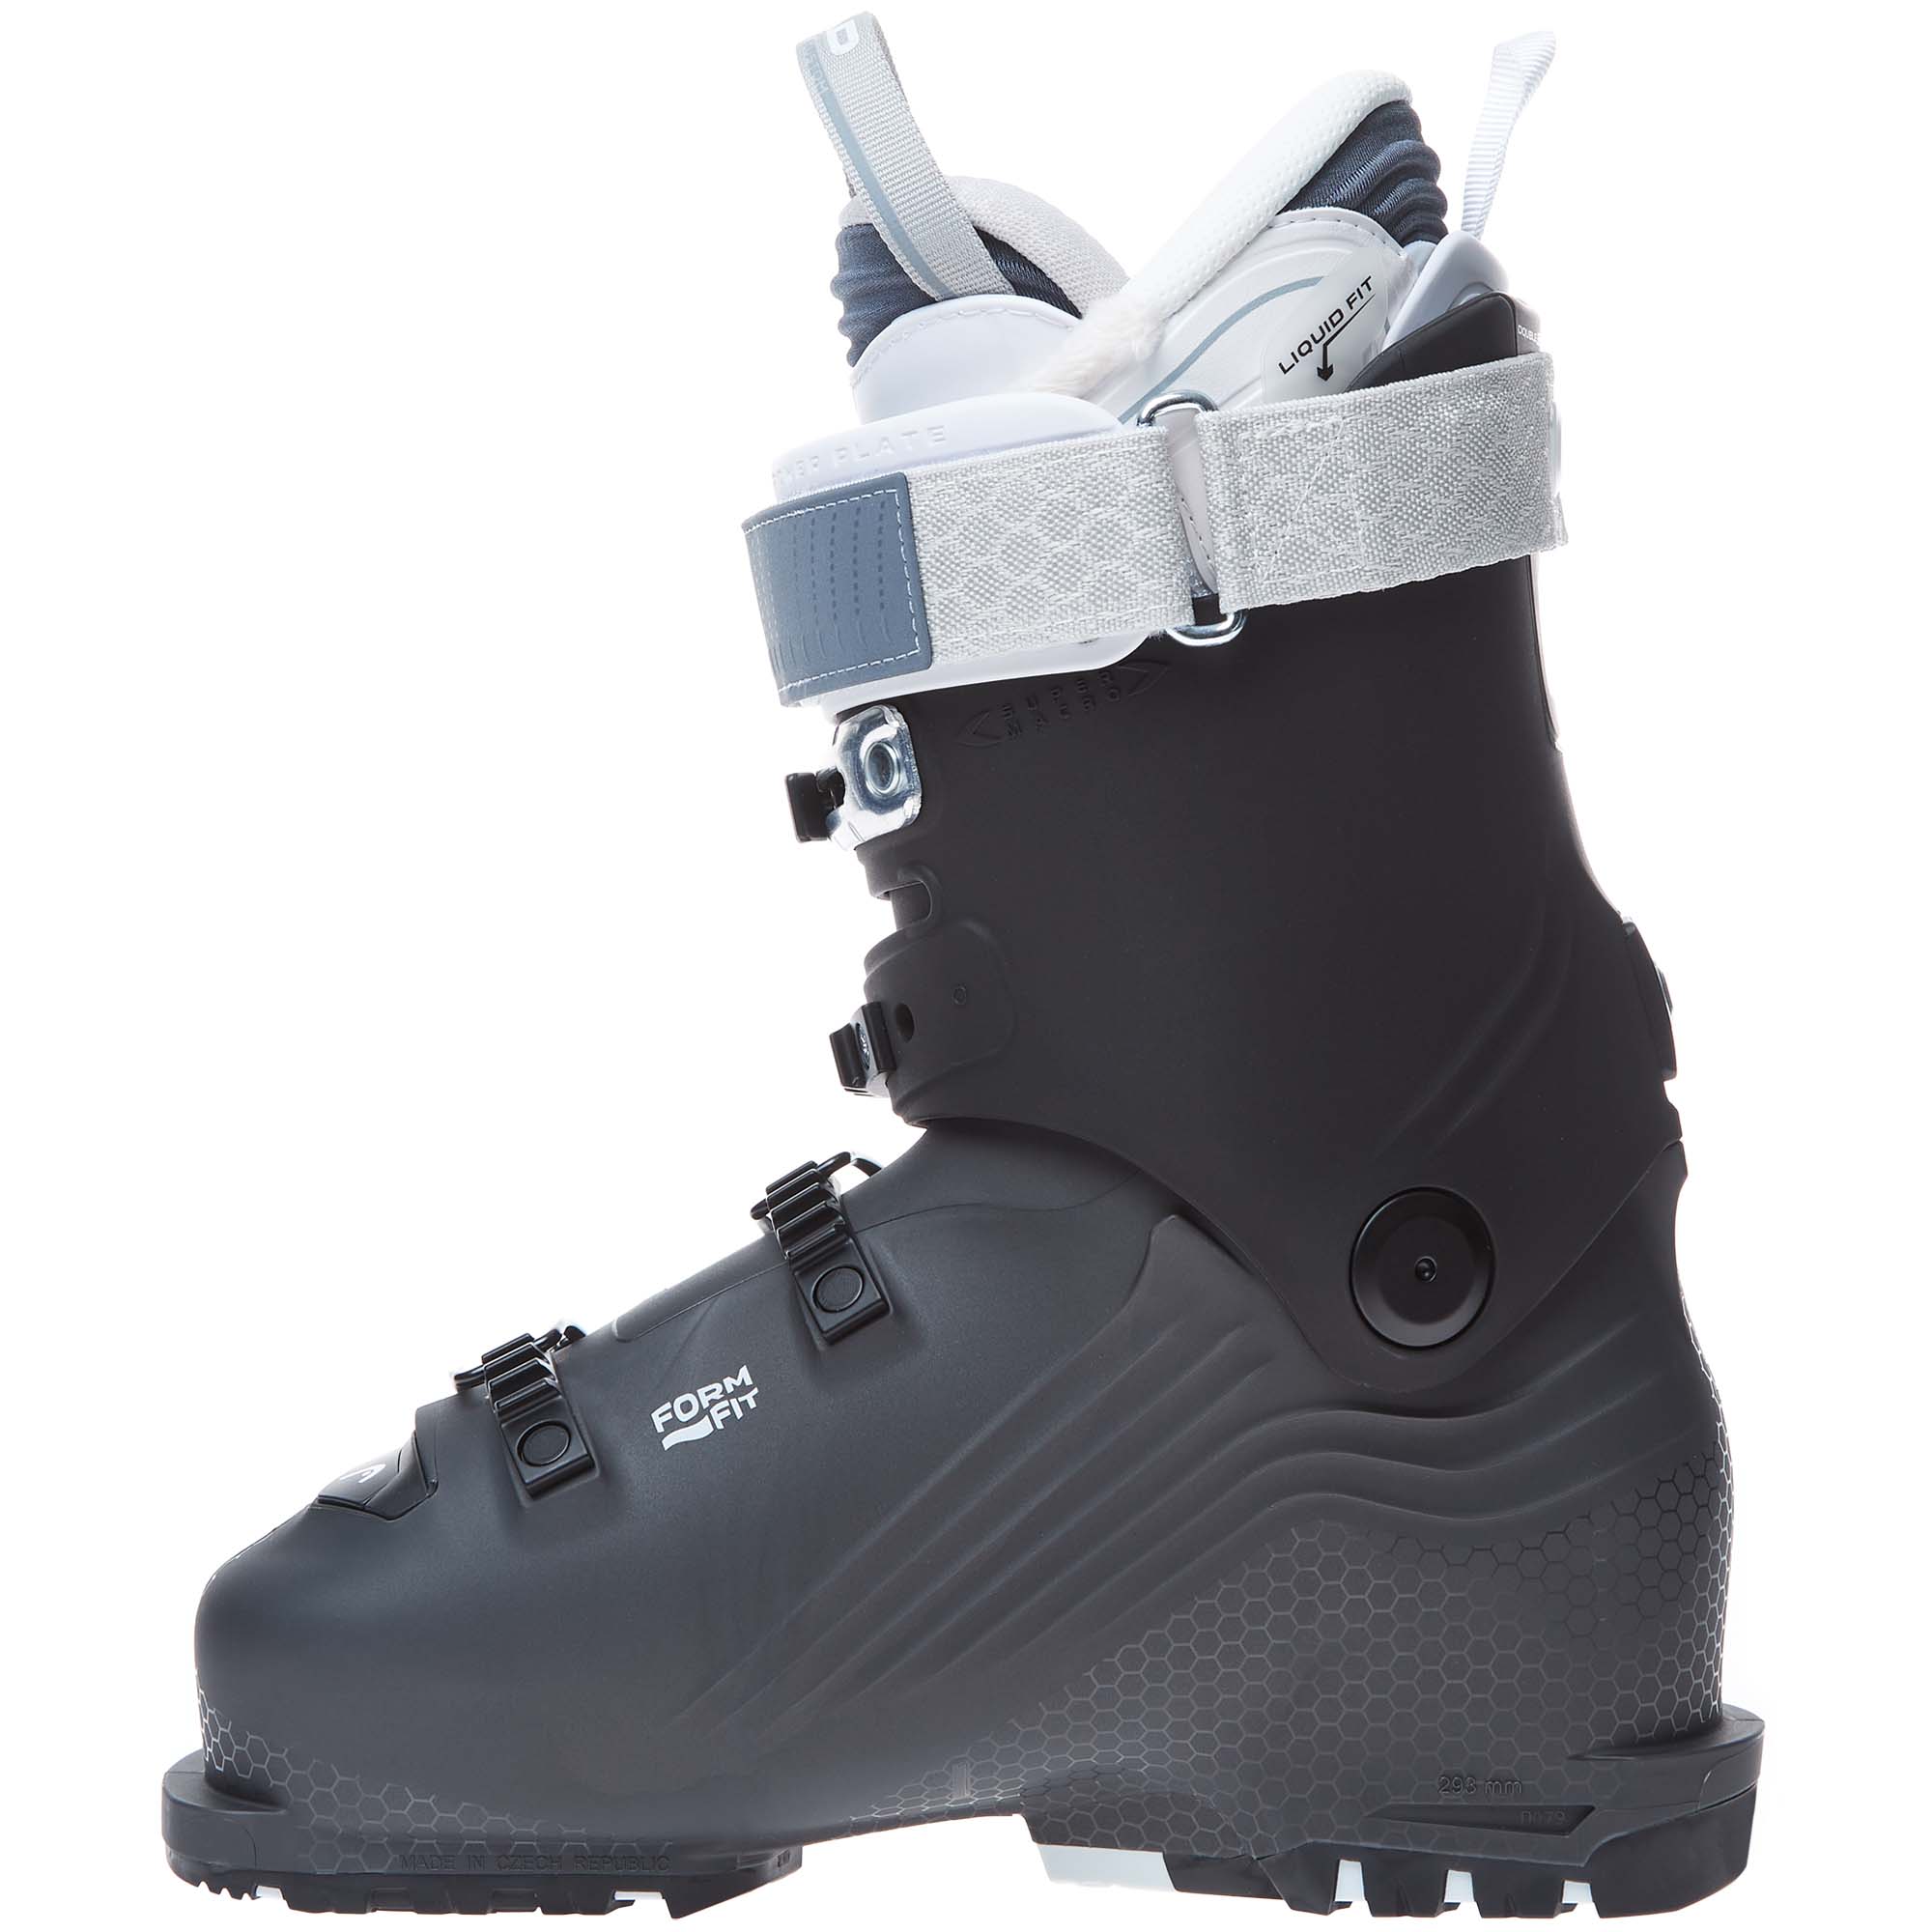 Head Nexo Lyt 100 W GW Women's GripWalk Ski Boots